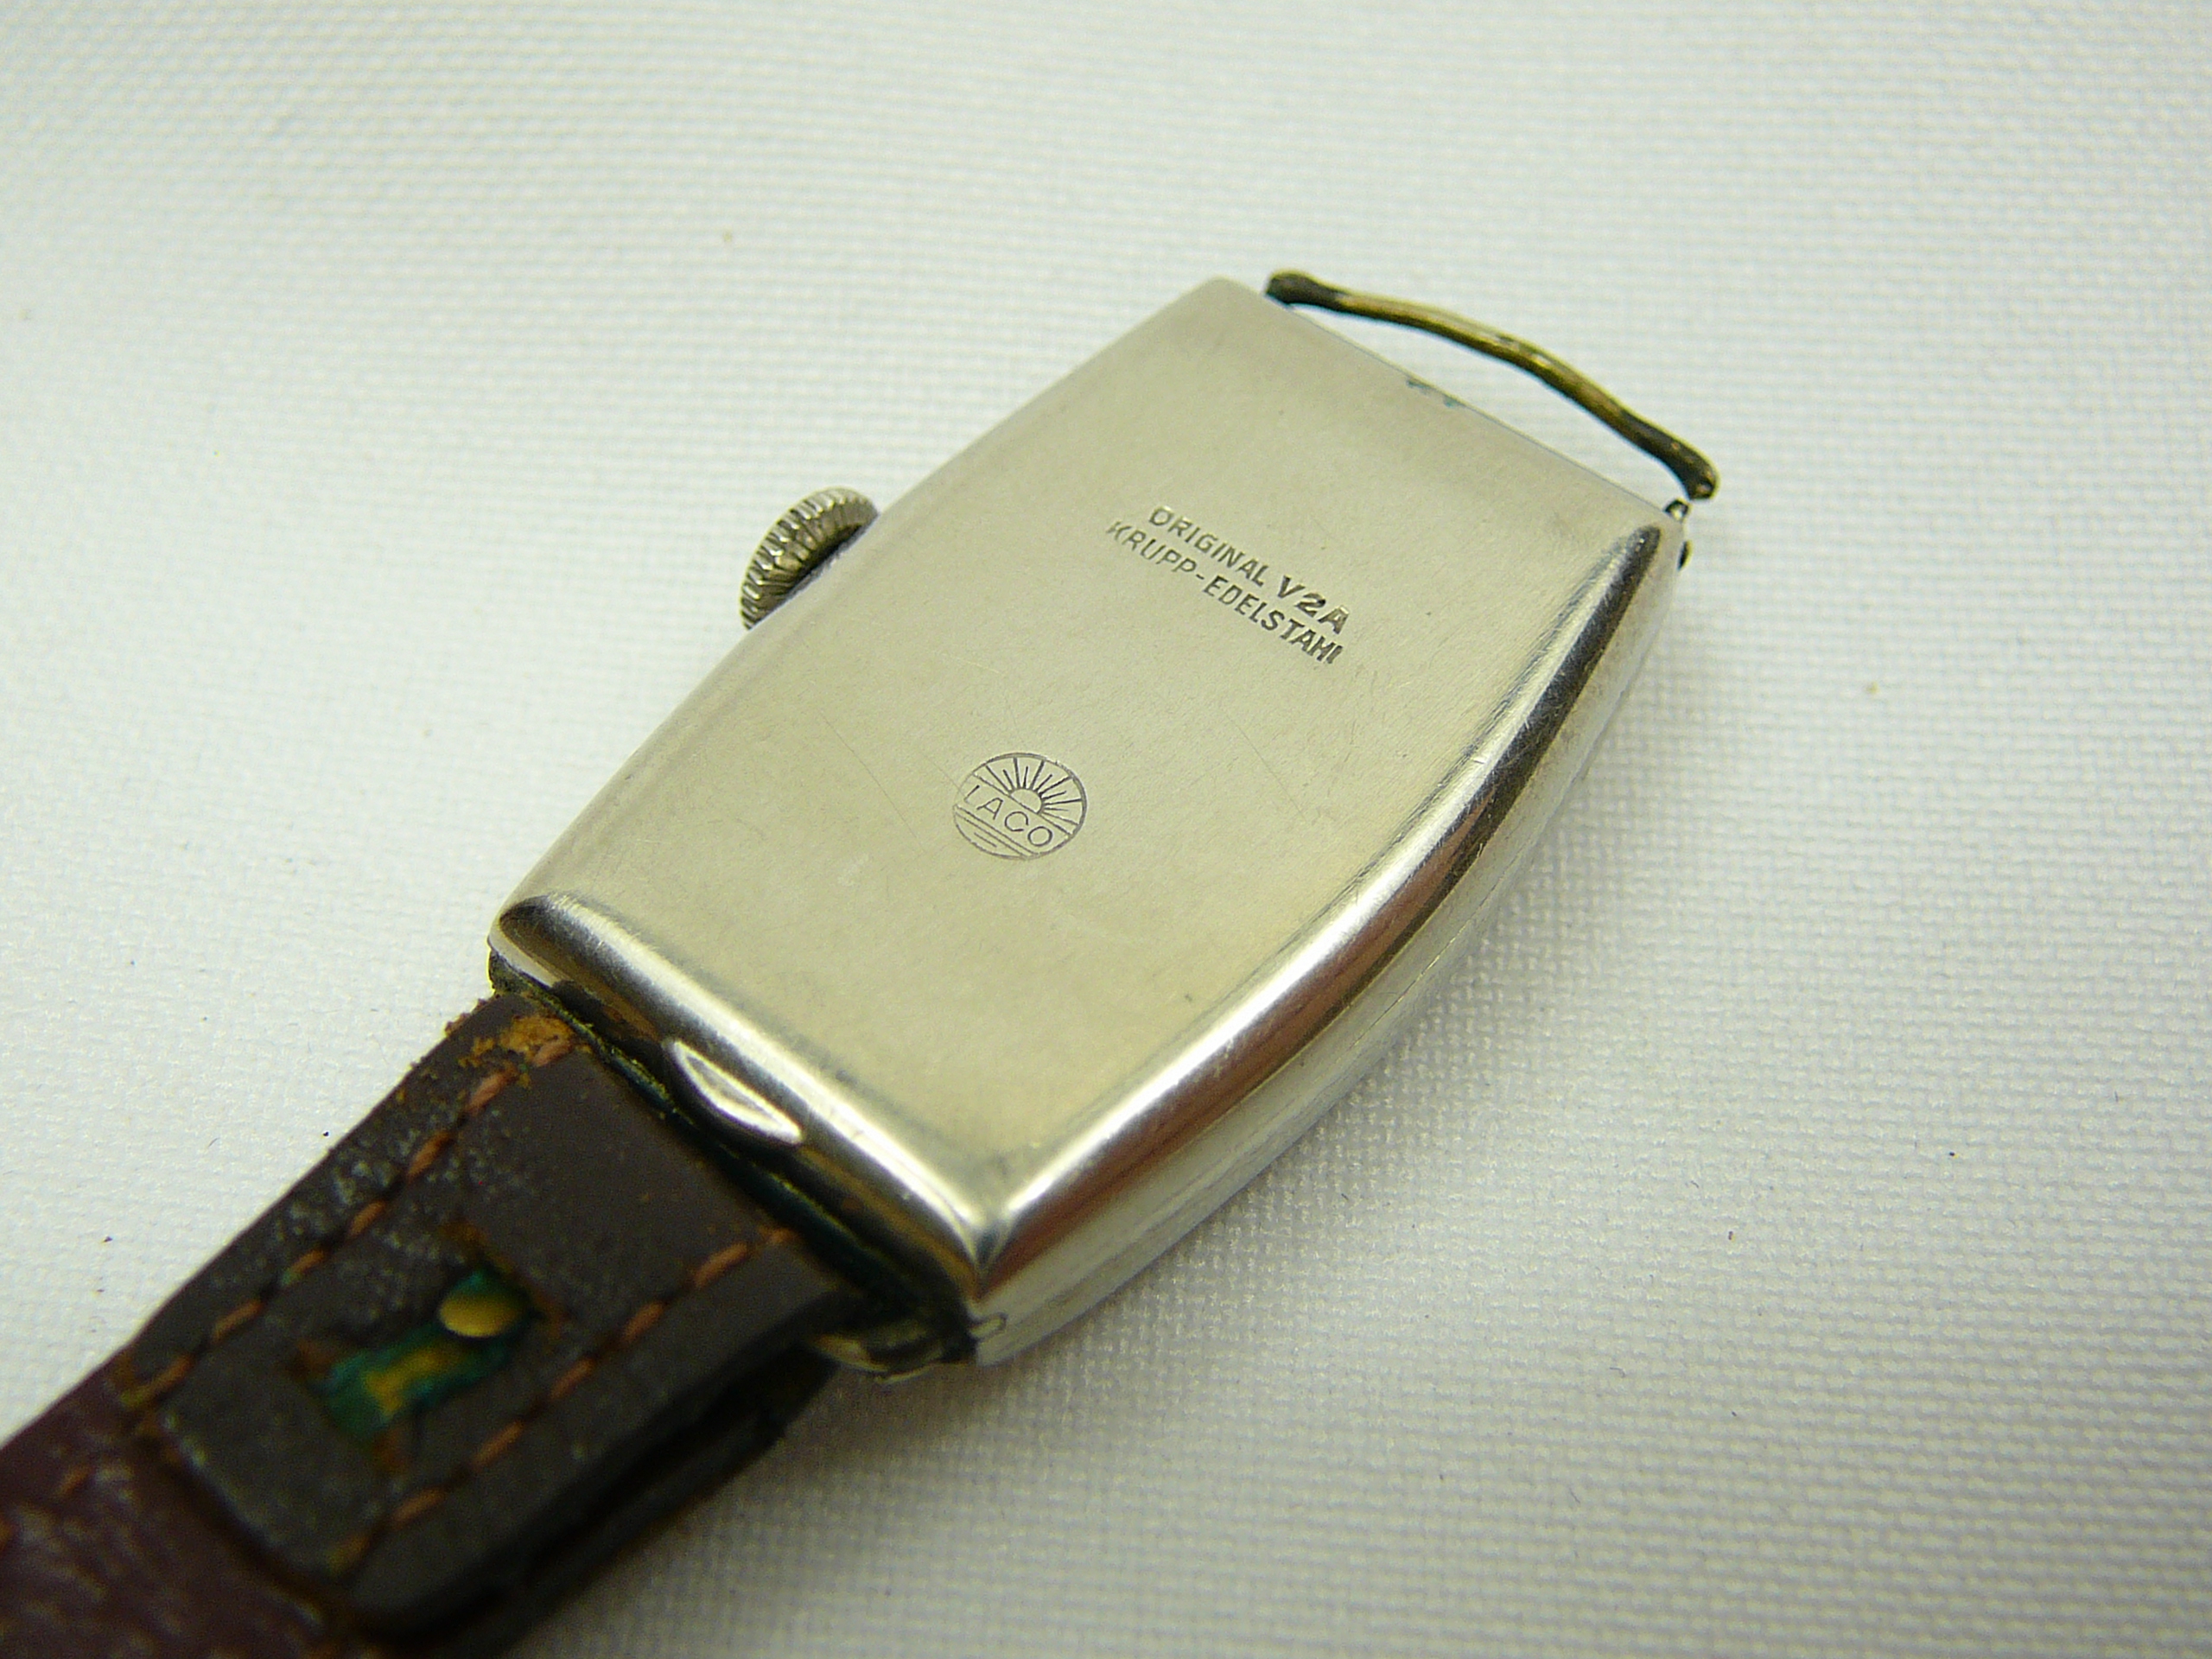 Gents Laco vintage wrist watch - Image 5 of 5